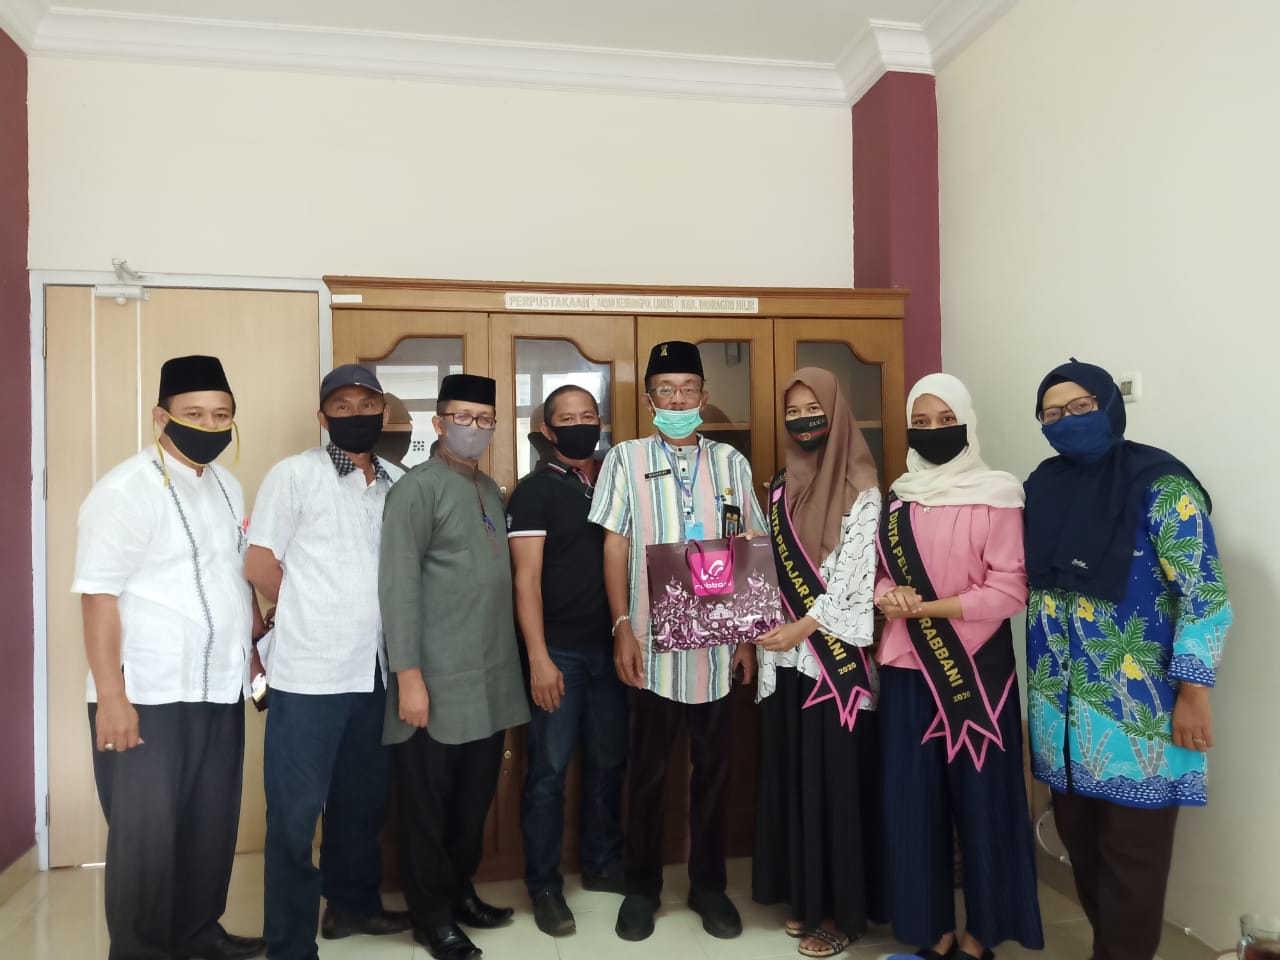 Duta Pelajar Rabbani Inhil Silaturrahmi ke Kantor Kesbangpol